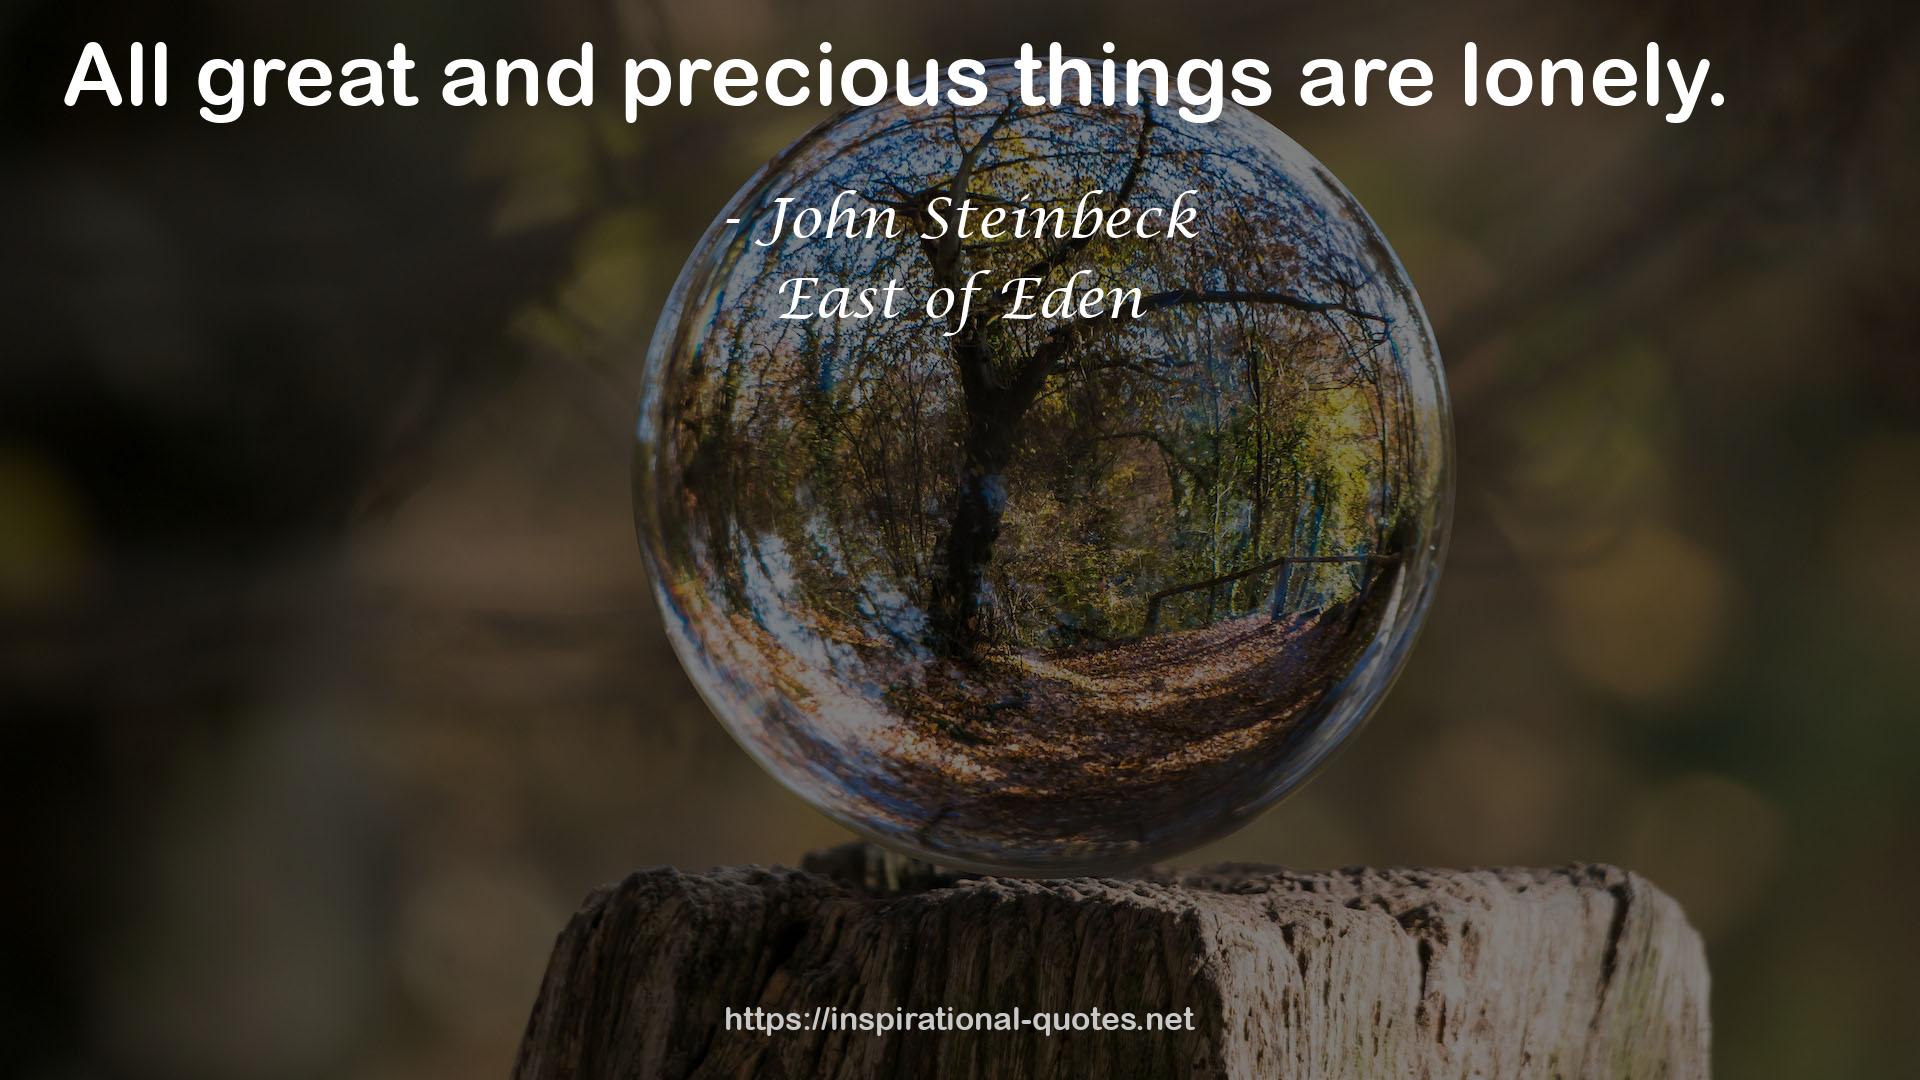 John Steinbeck QUOTES